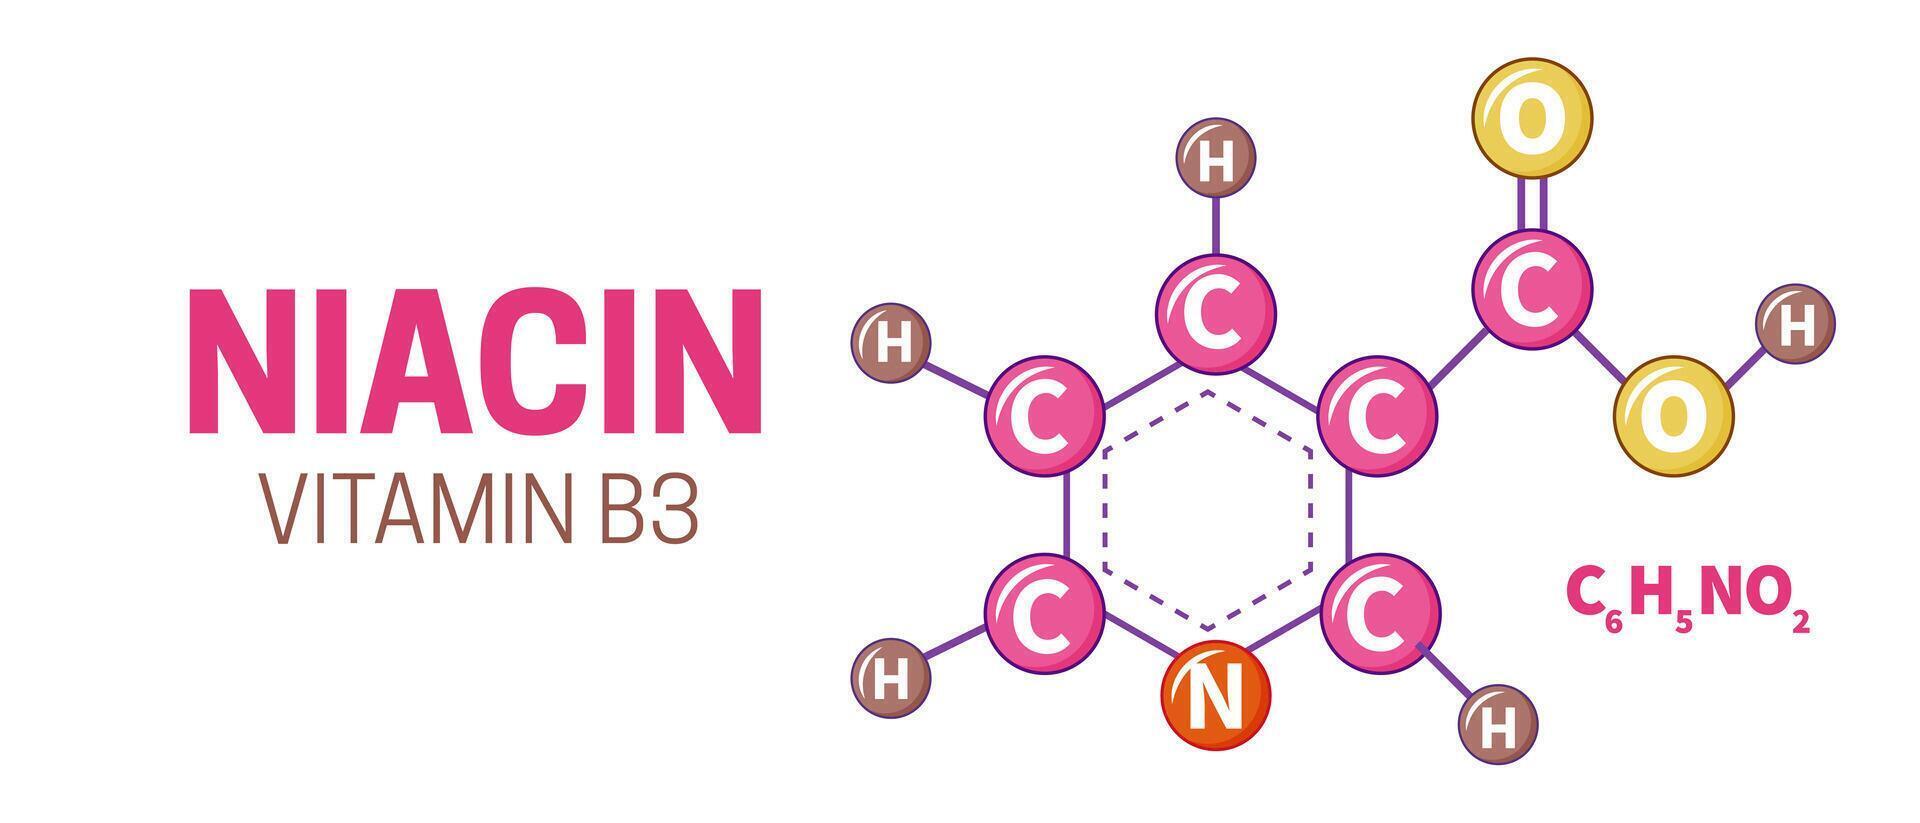 vitamine b3 niacine molécule illustration vecteur